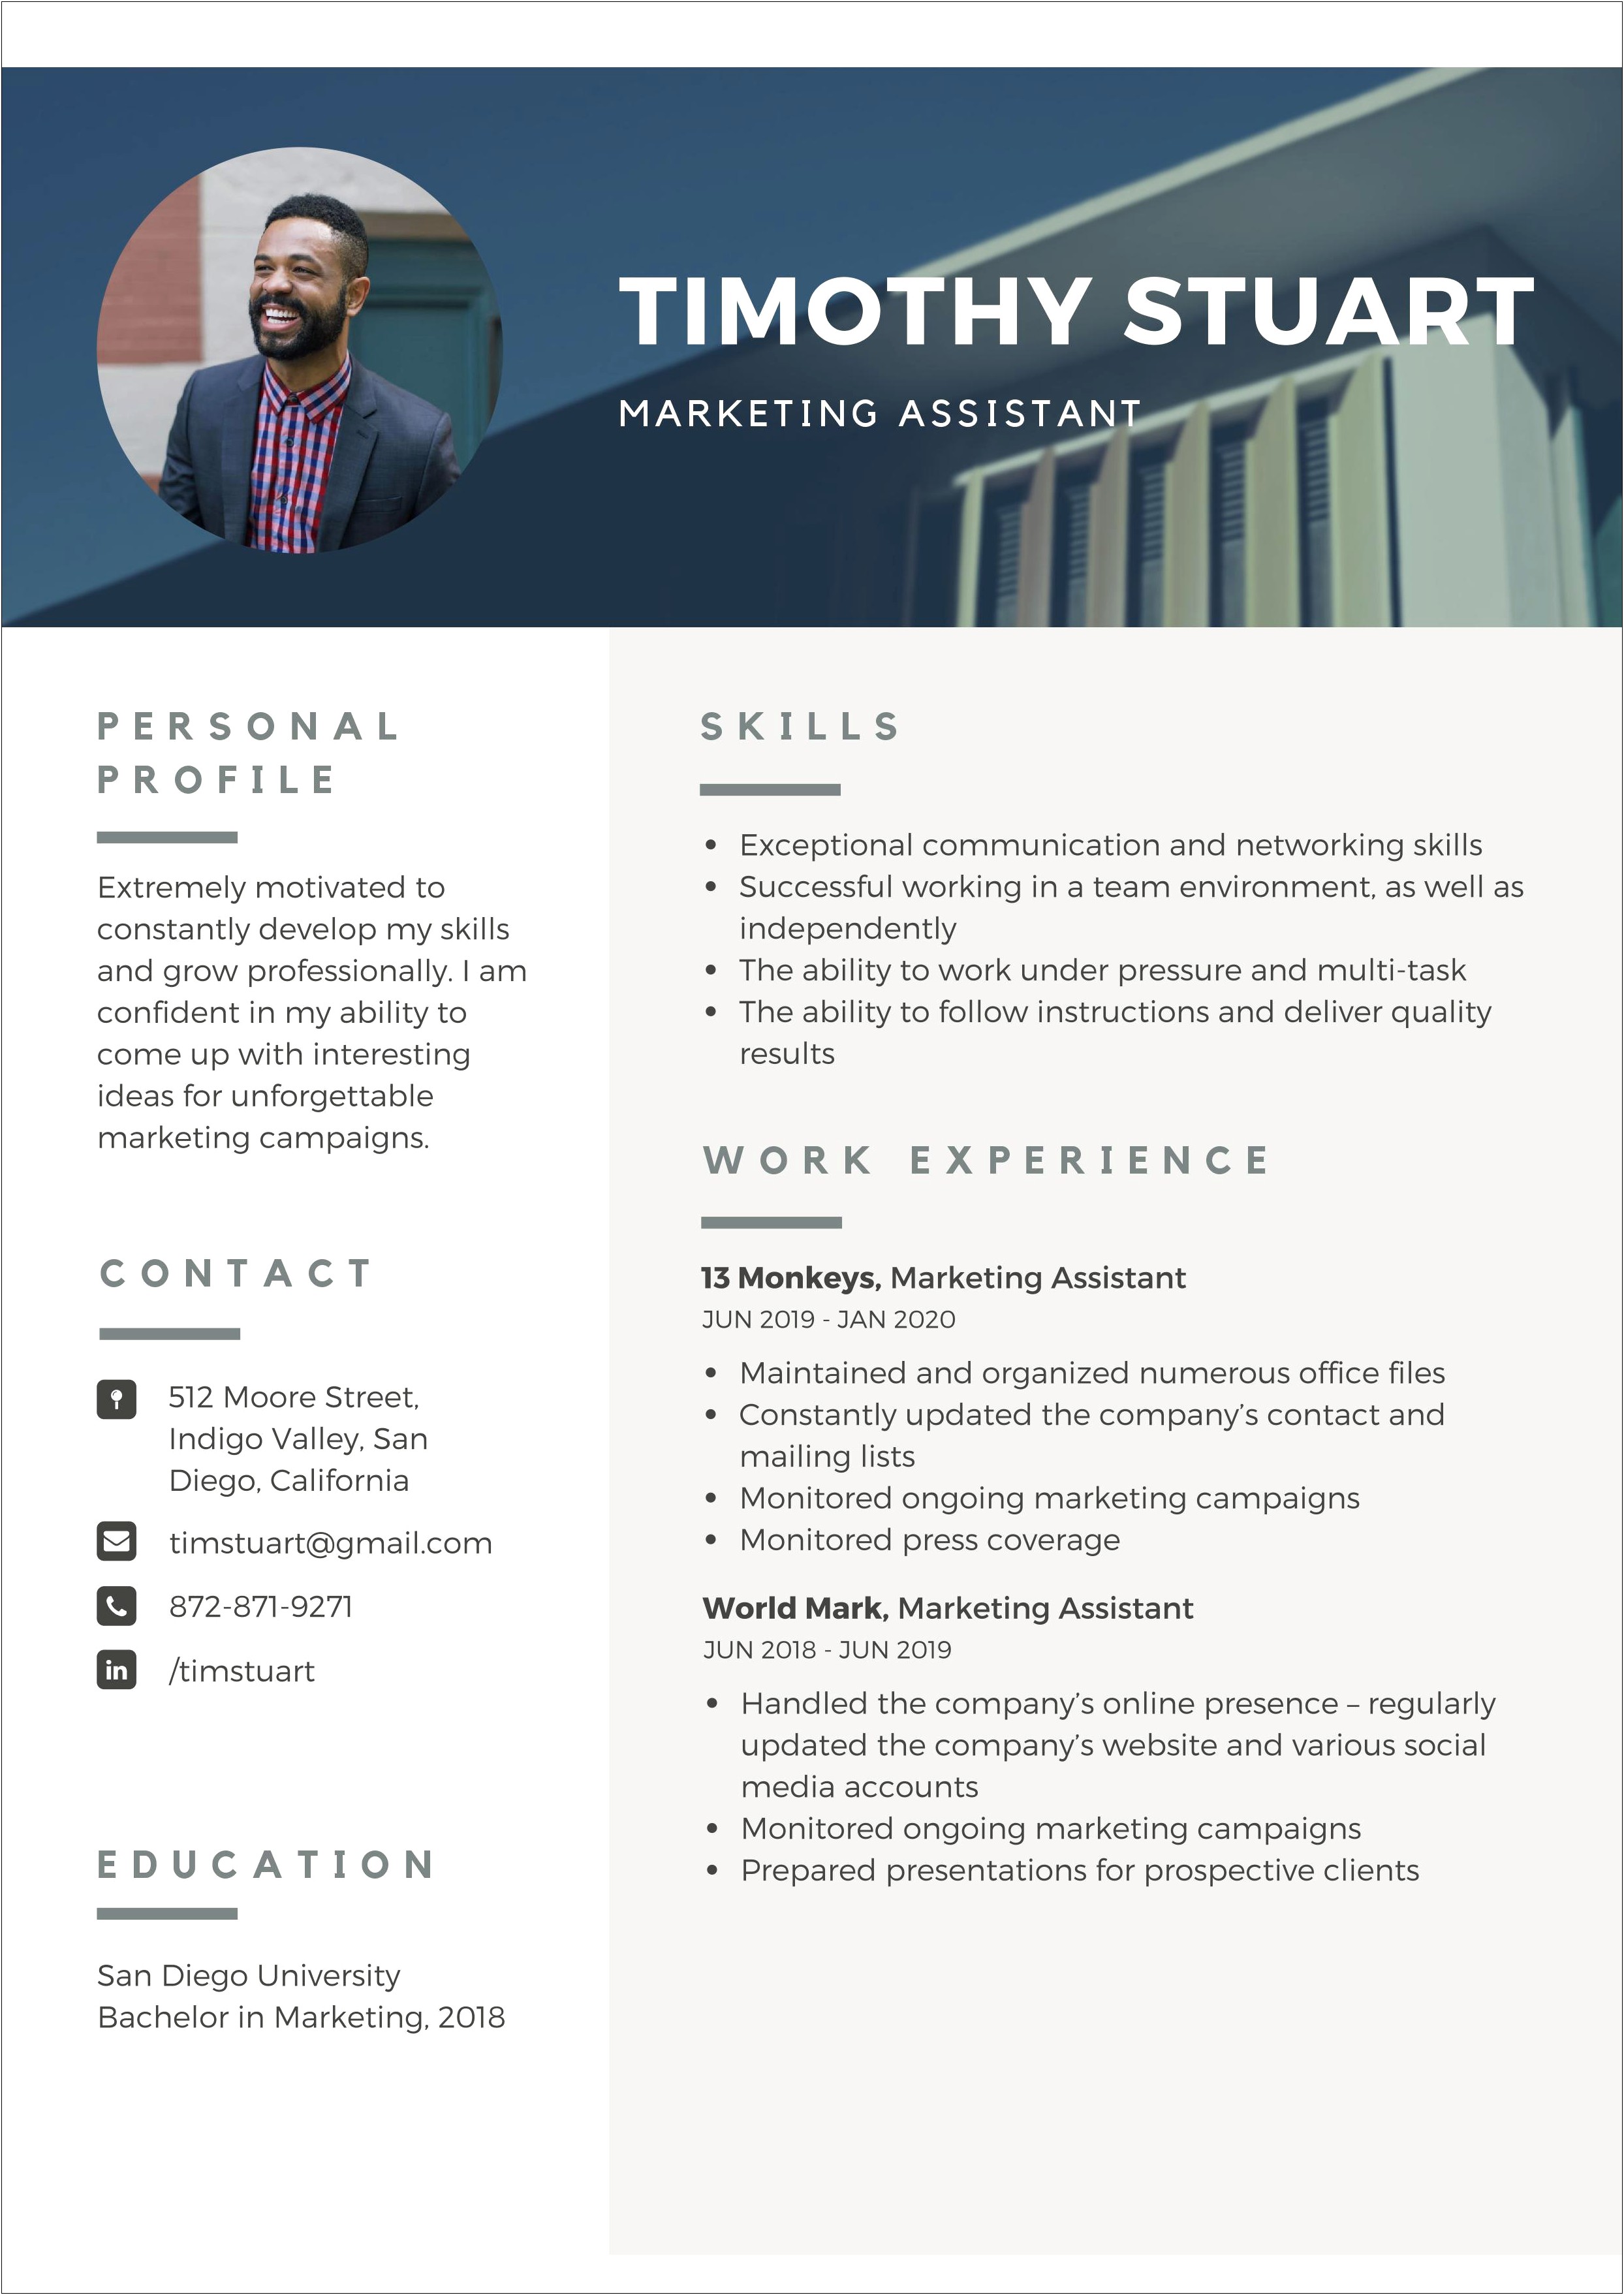 Top Resume Skills In Marketing 2019